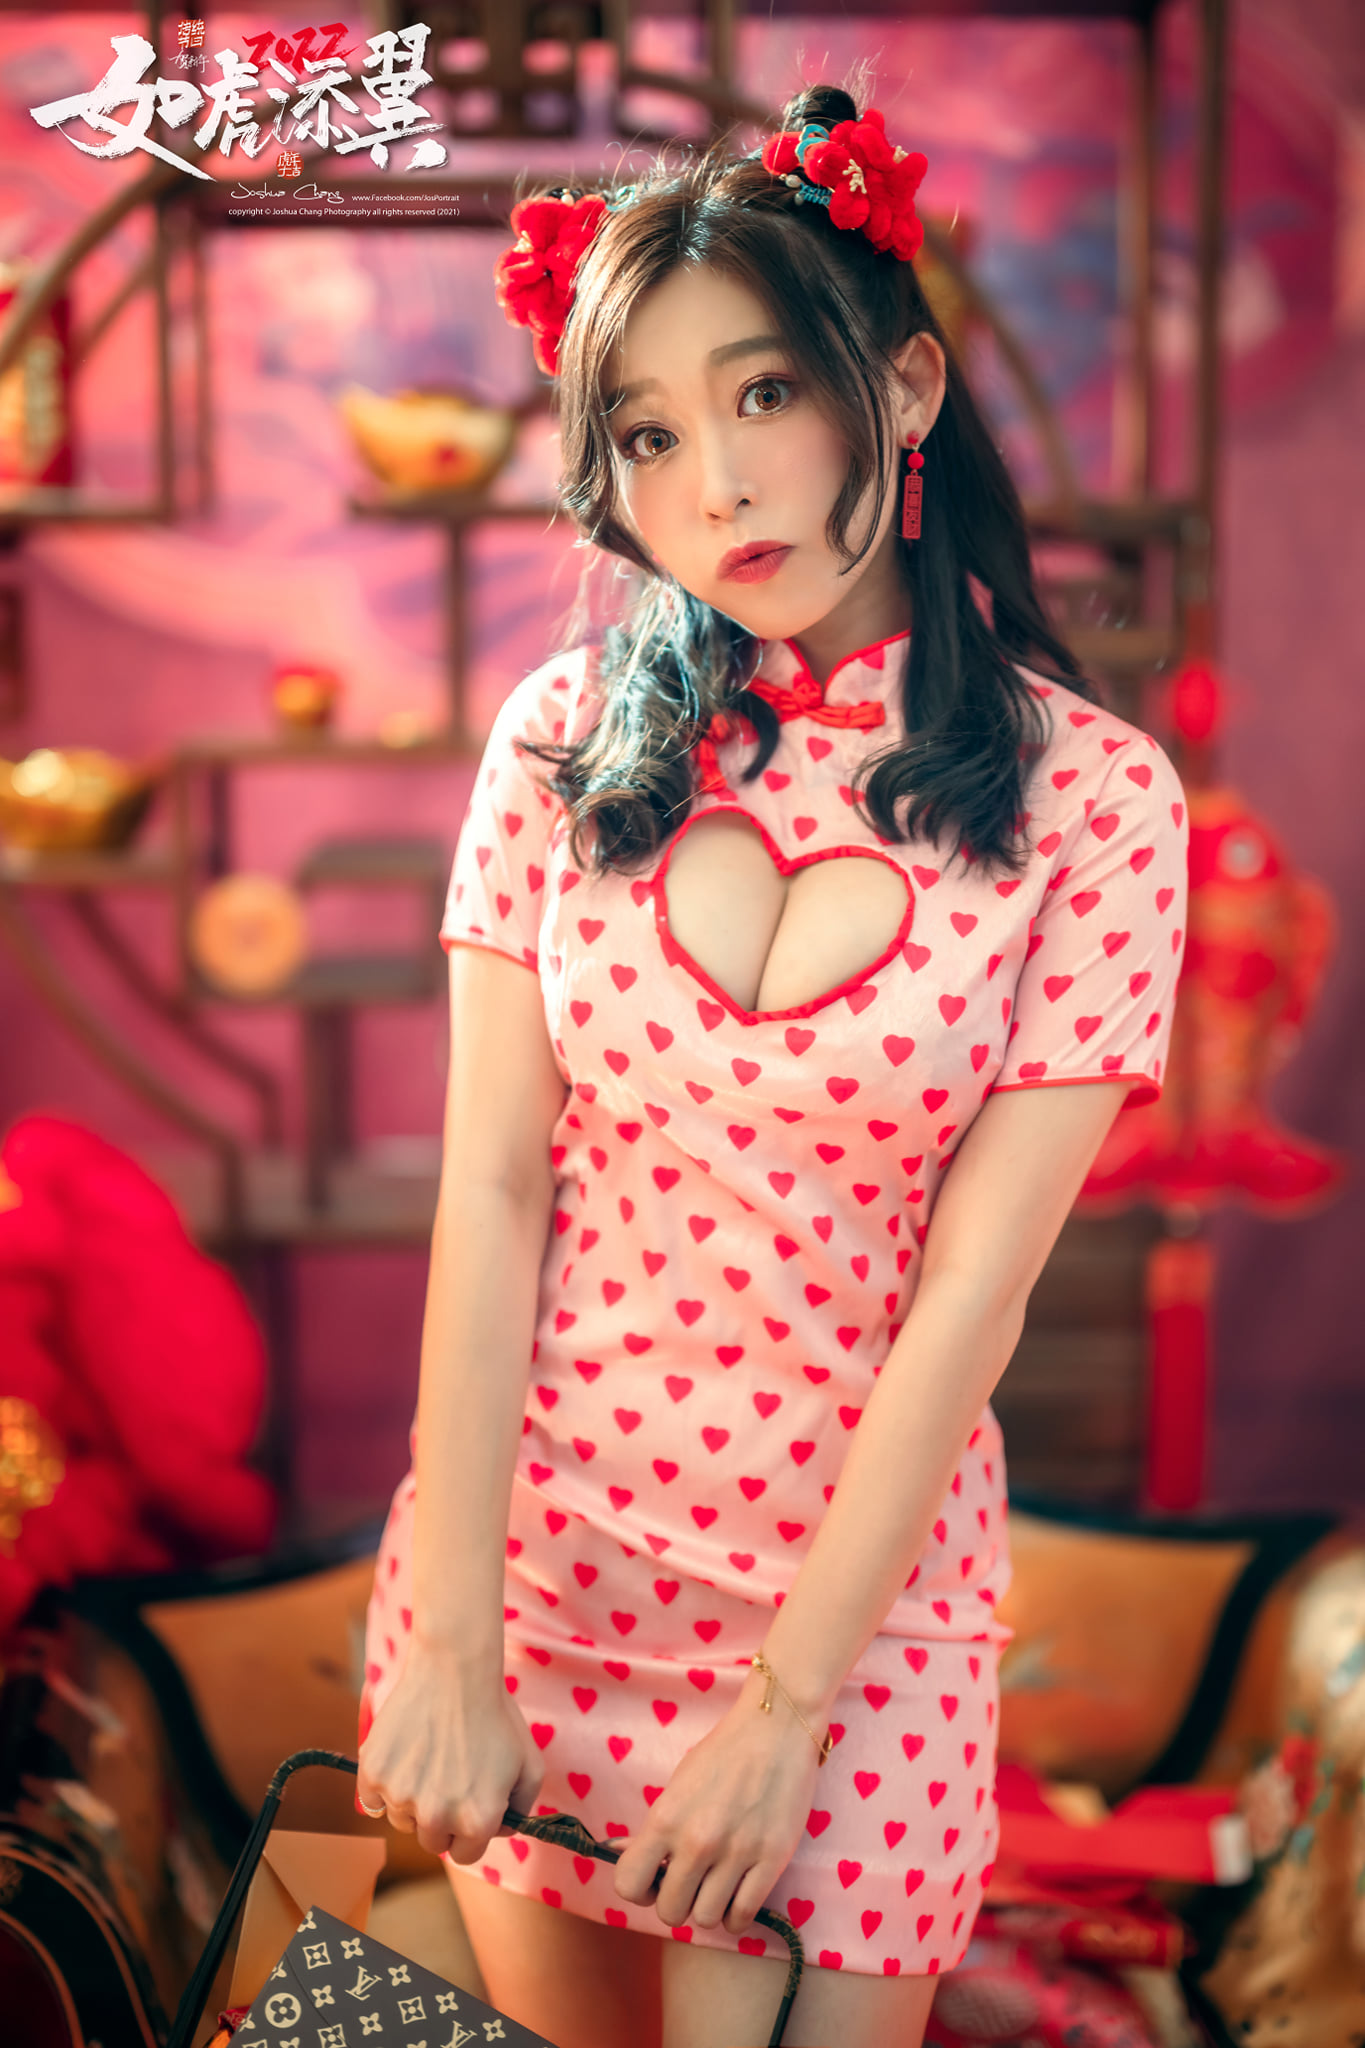 Polka Dots Dress Asian Women Oriental Long Hair Brunette Red Joshua Chang Looking At Viewer Red Lips 1365x2048